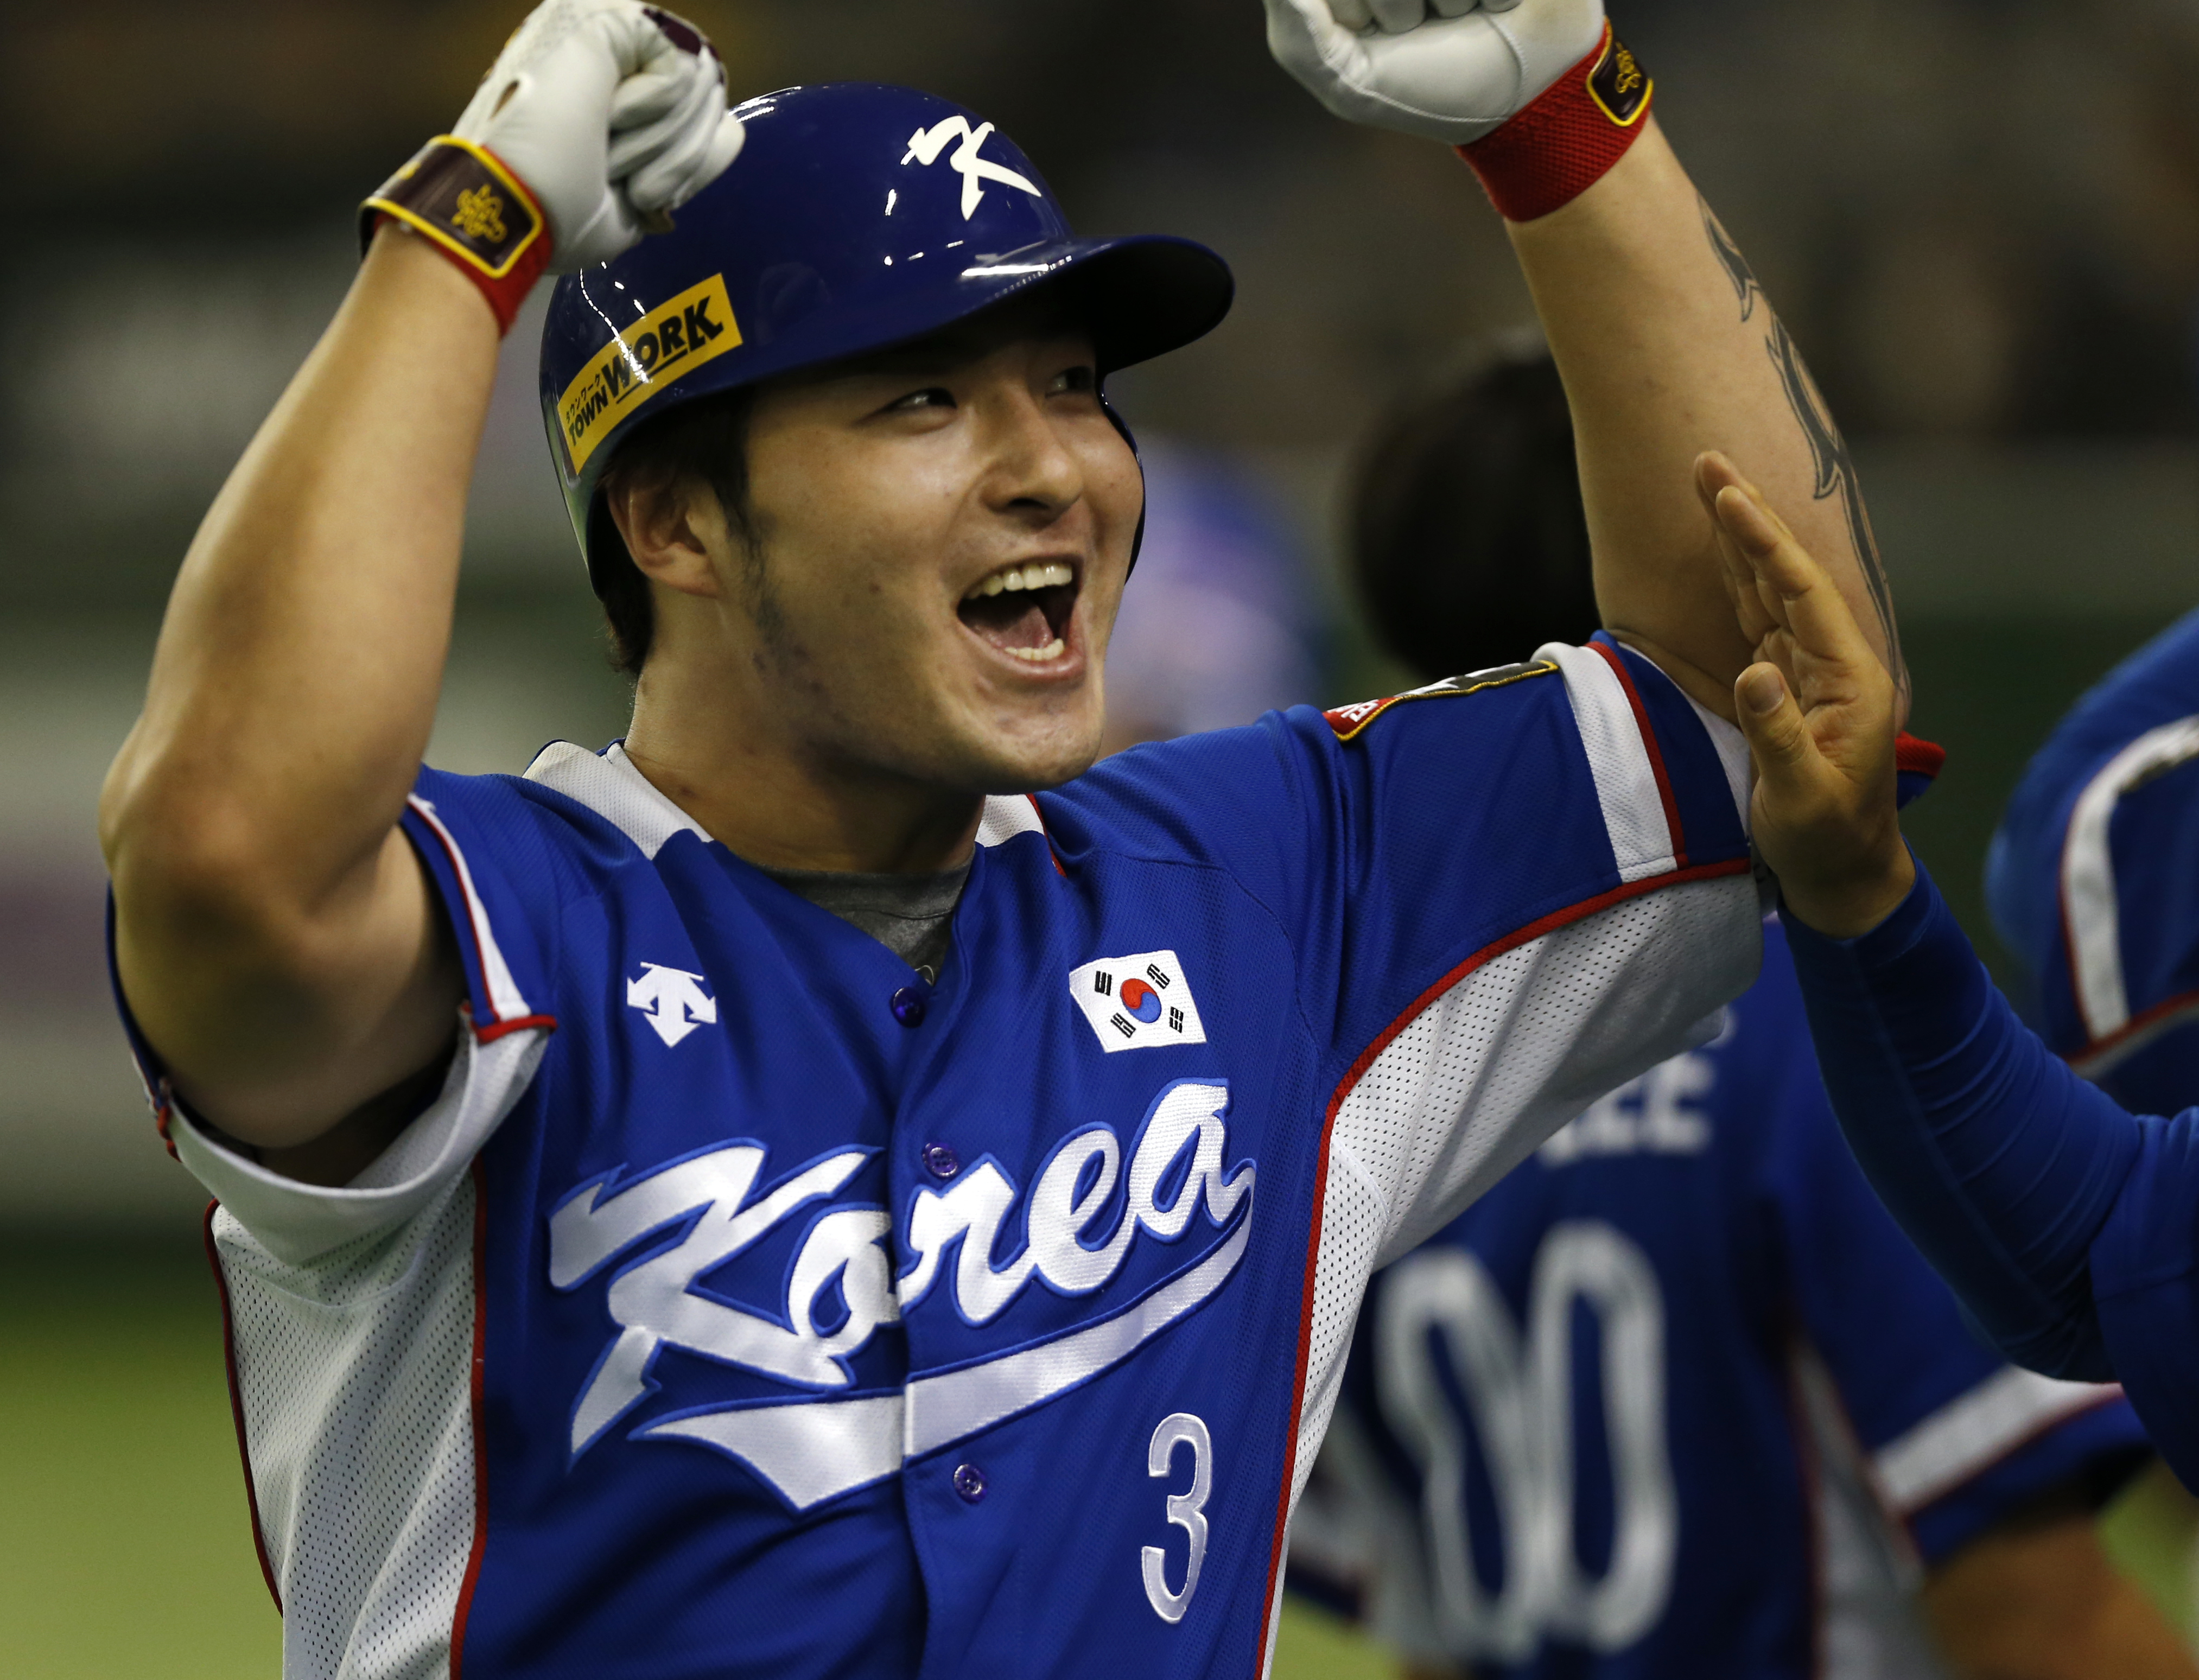 Major League Baseball Heading To South Korea in November - Fastball